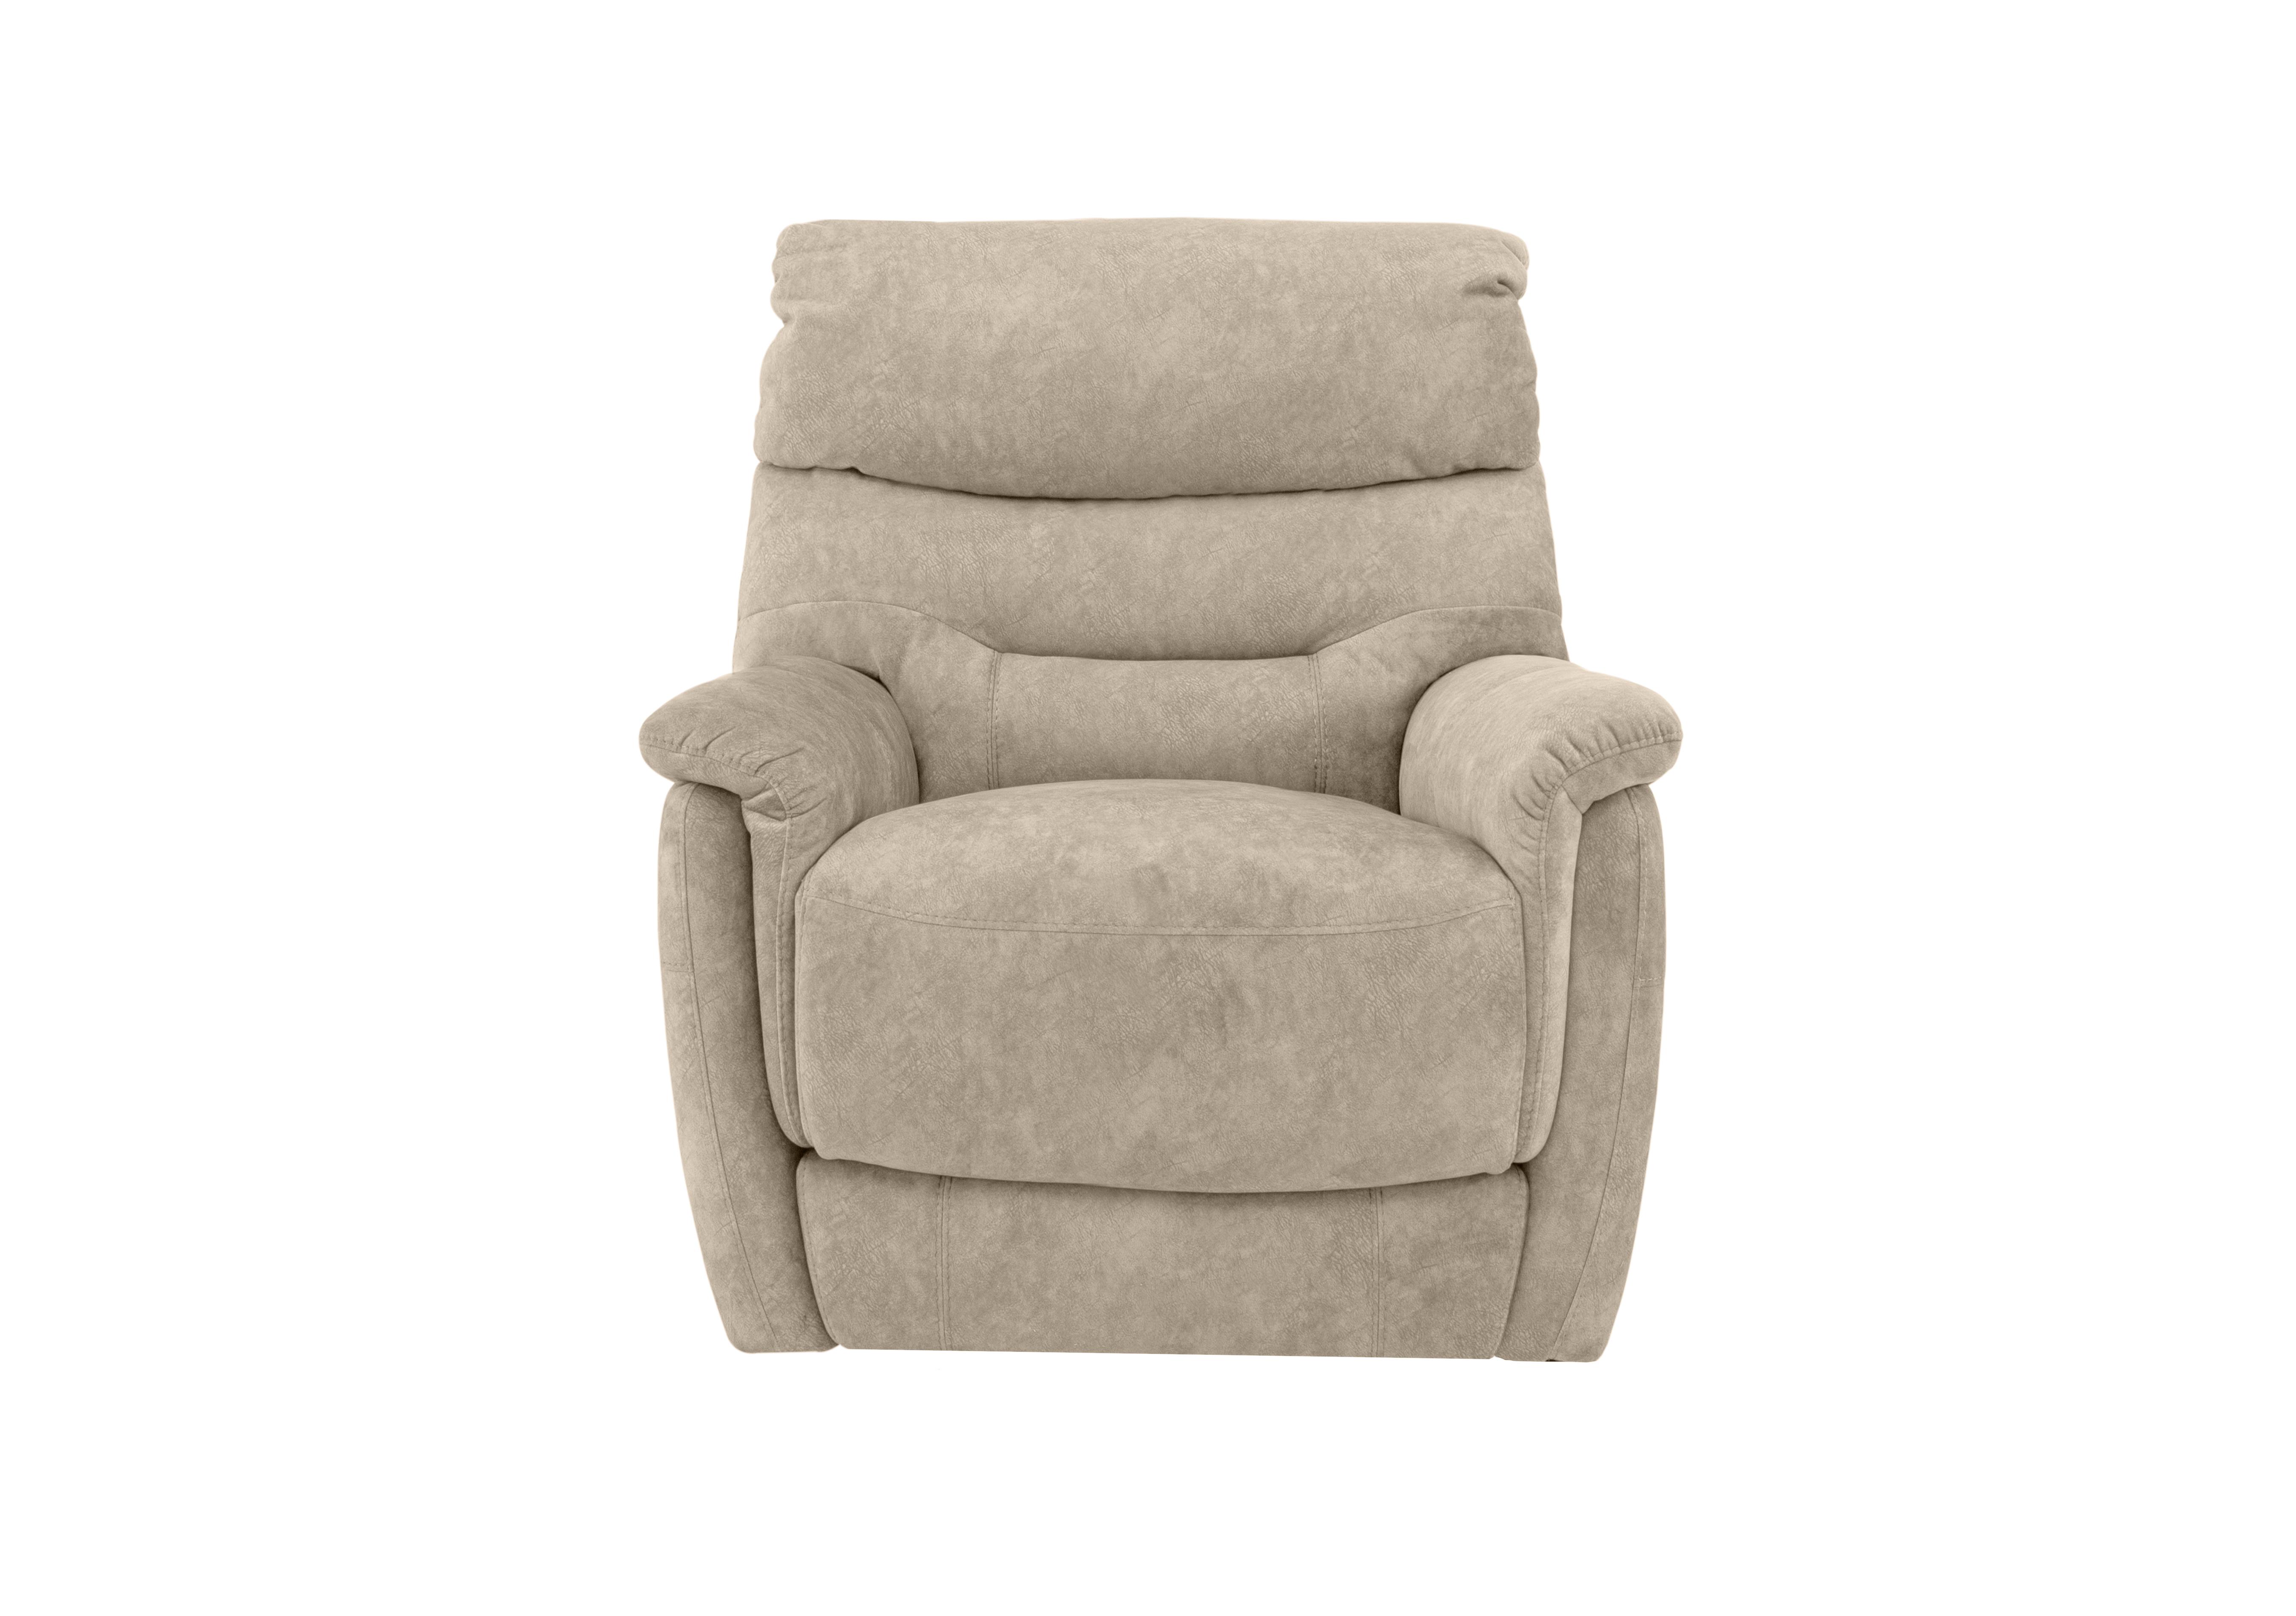 Chicago Fabric Armchair in Bfa-Bnn-R26 Cream on Furniture Village